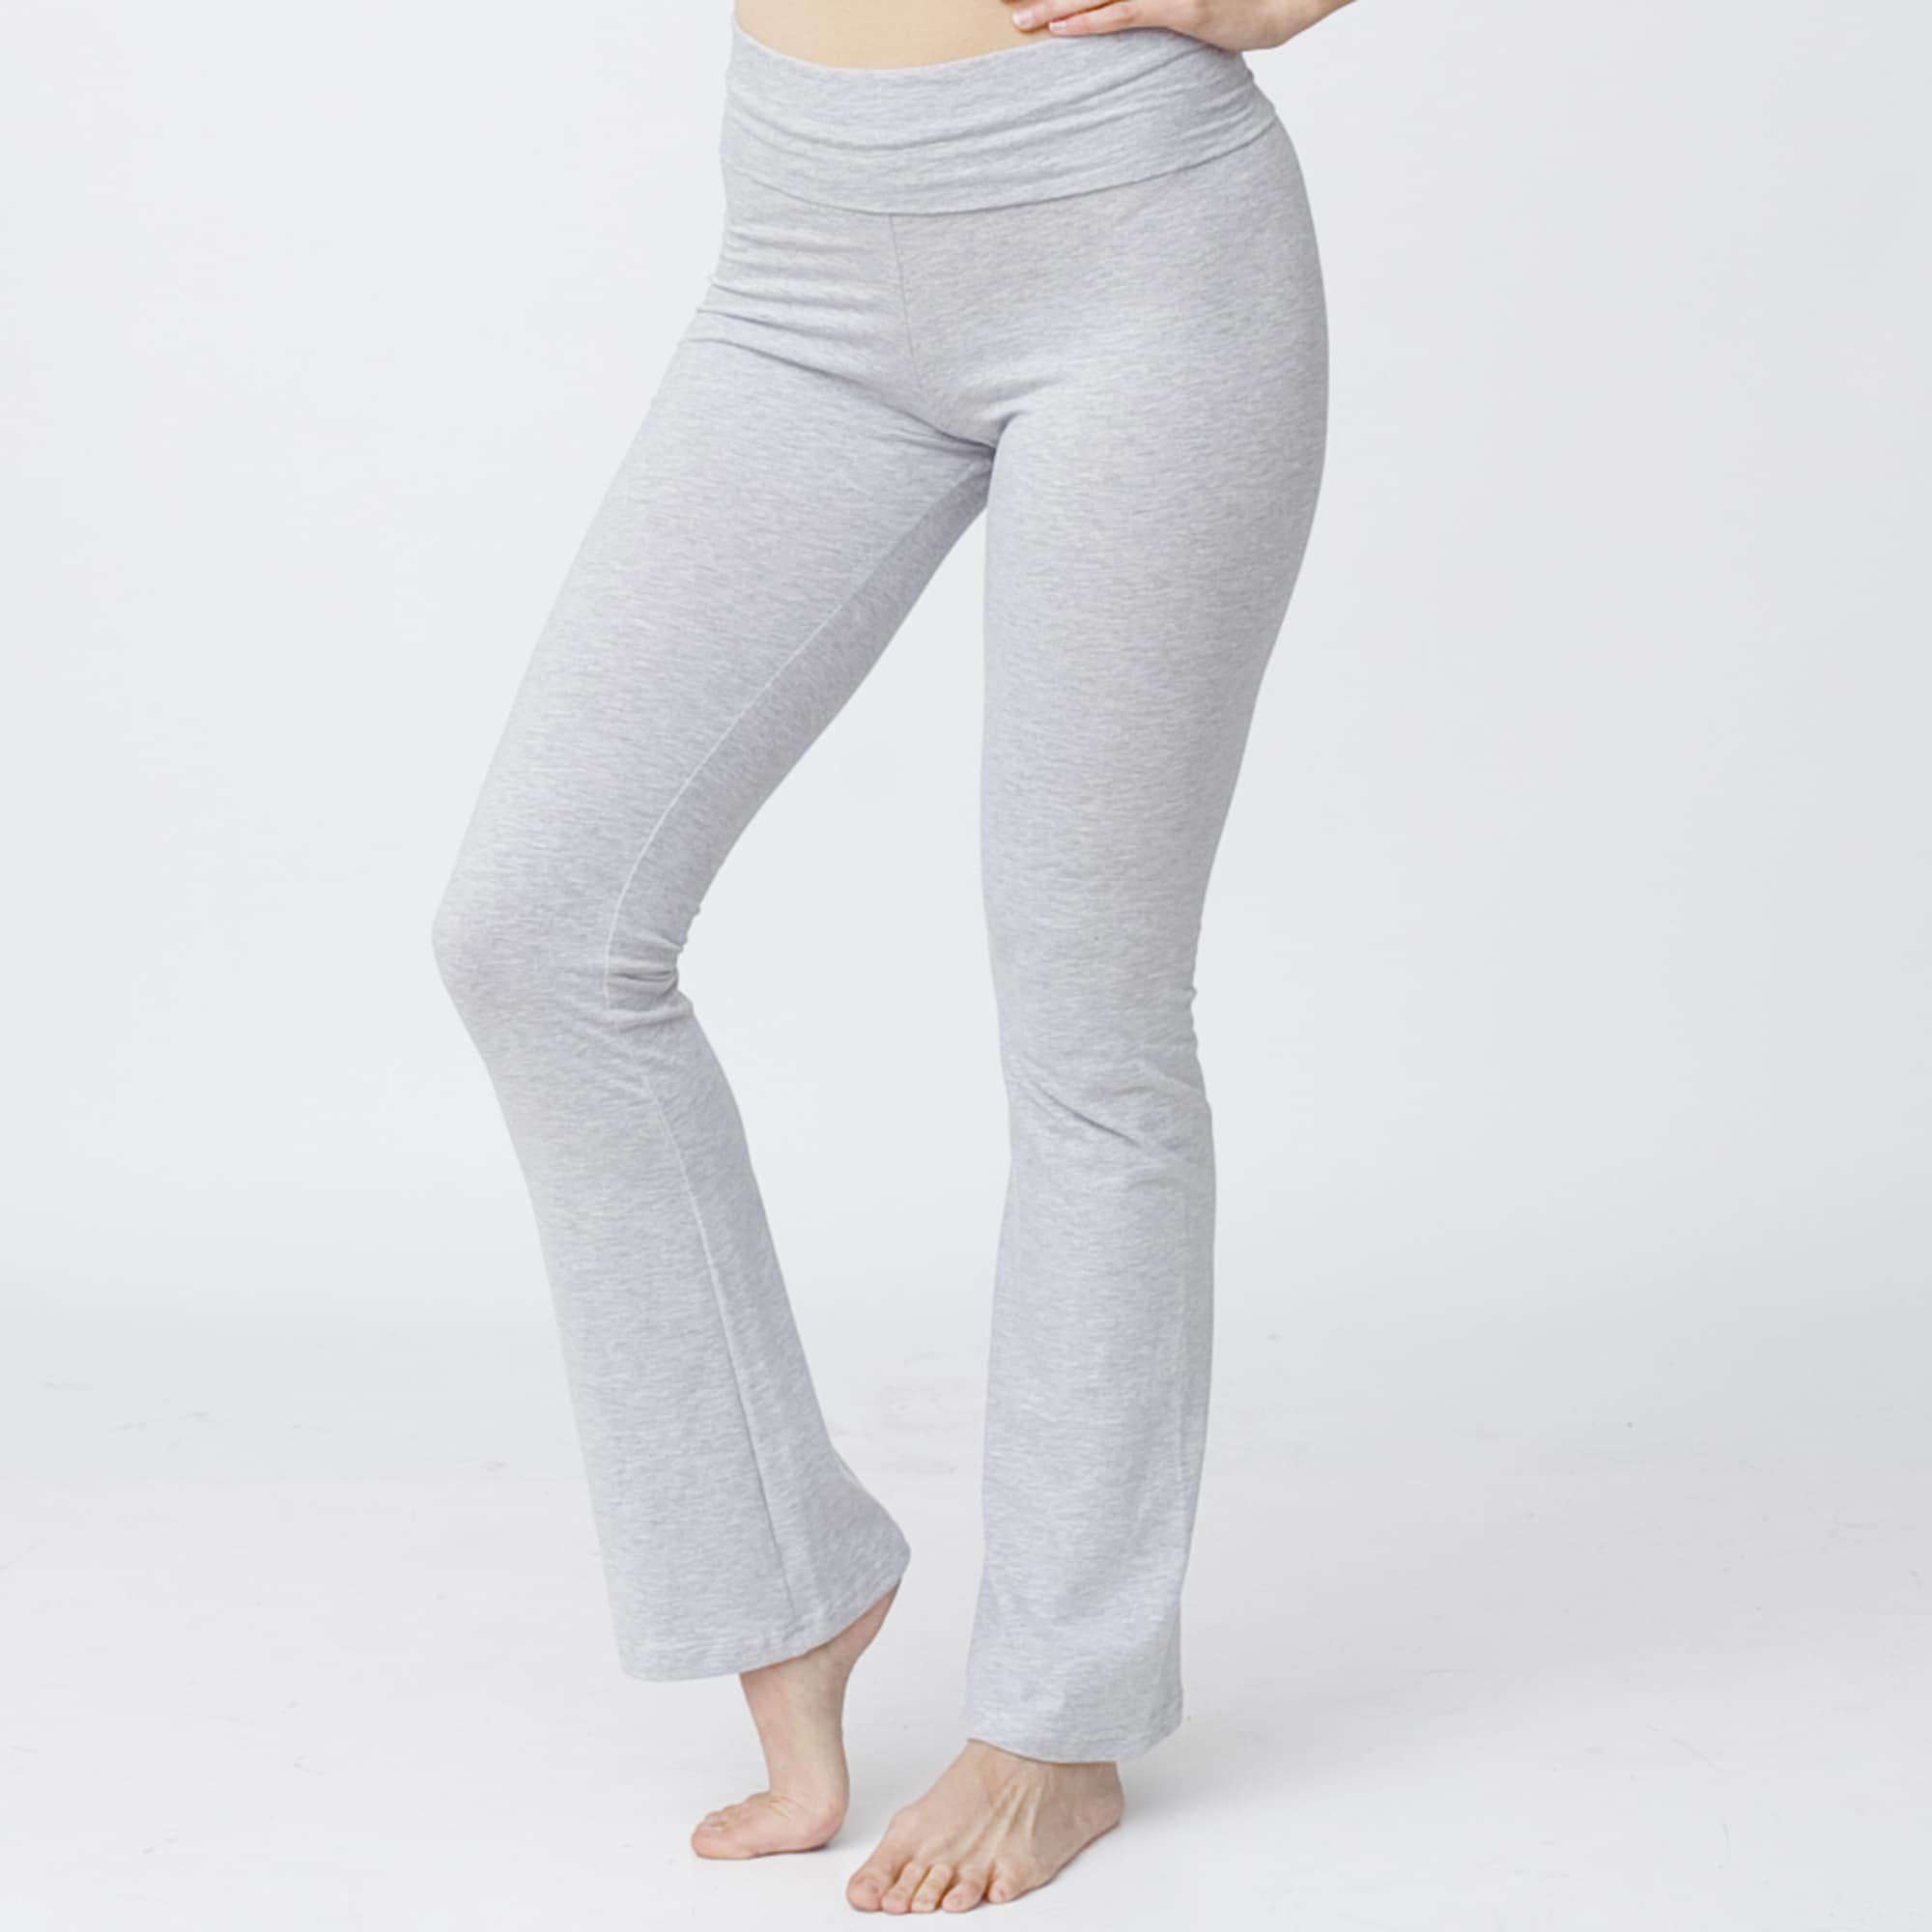 cotton spandex yoga pants